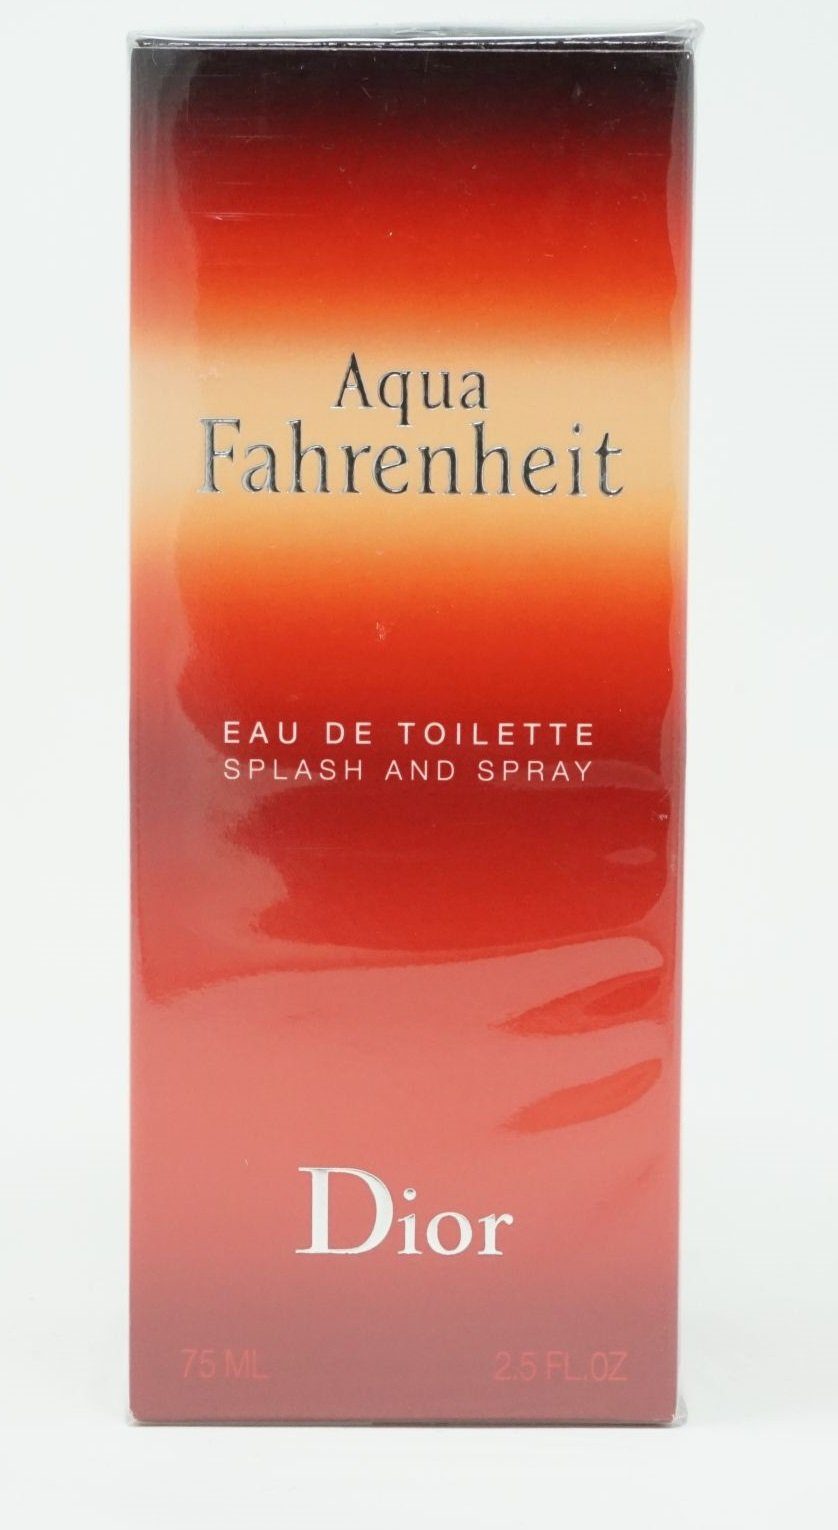 Dior Eau de Toilette Dior Eau 75ml Spray Toilette Aqua Fahrenheit Splash de and